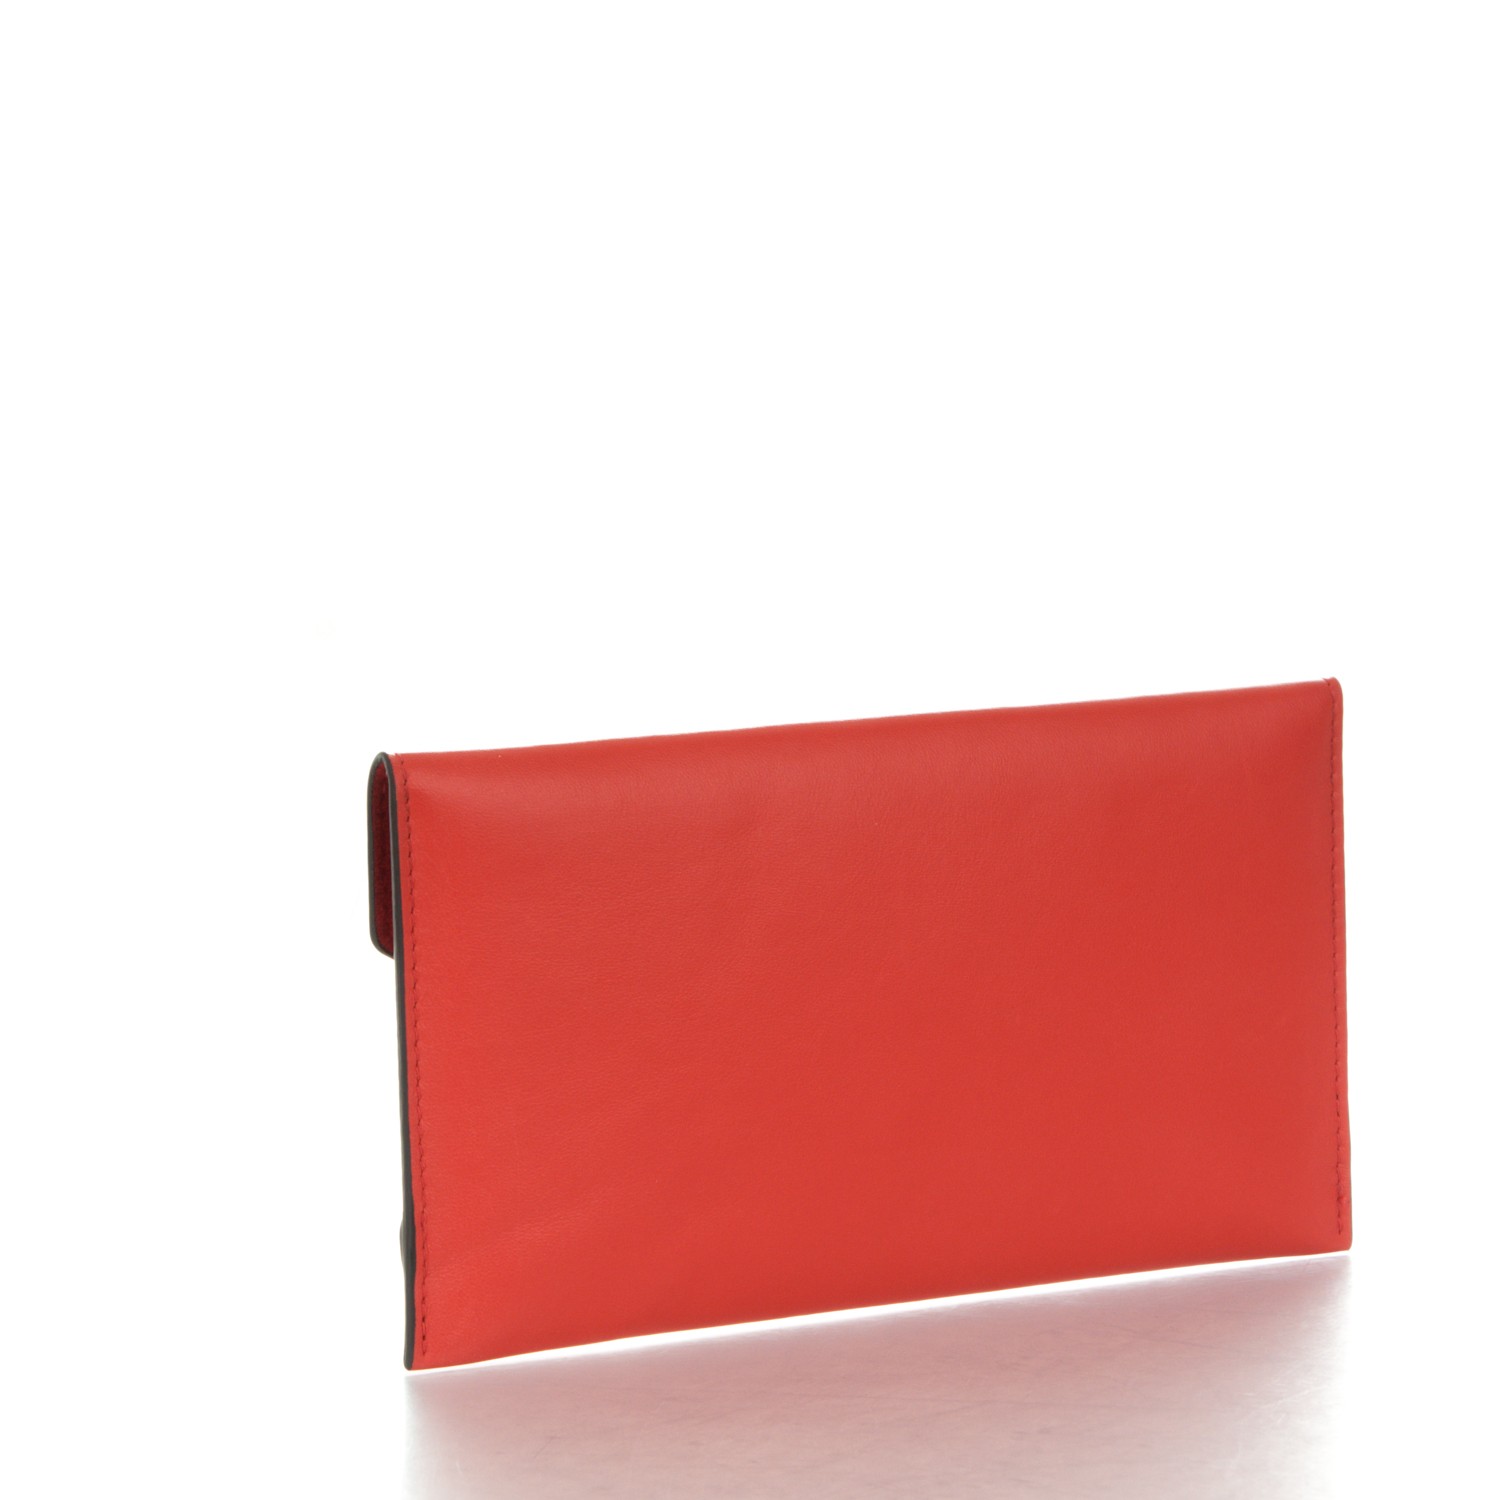 LOUIS VUITTON 2020 CNY RED ENVELOPES 🧧 🐀  Red envelope, Red envelope  design, Voucher design